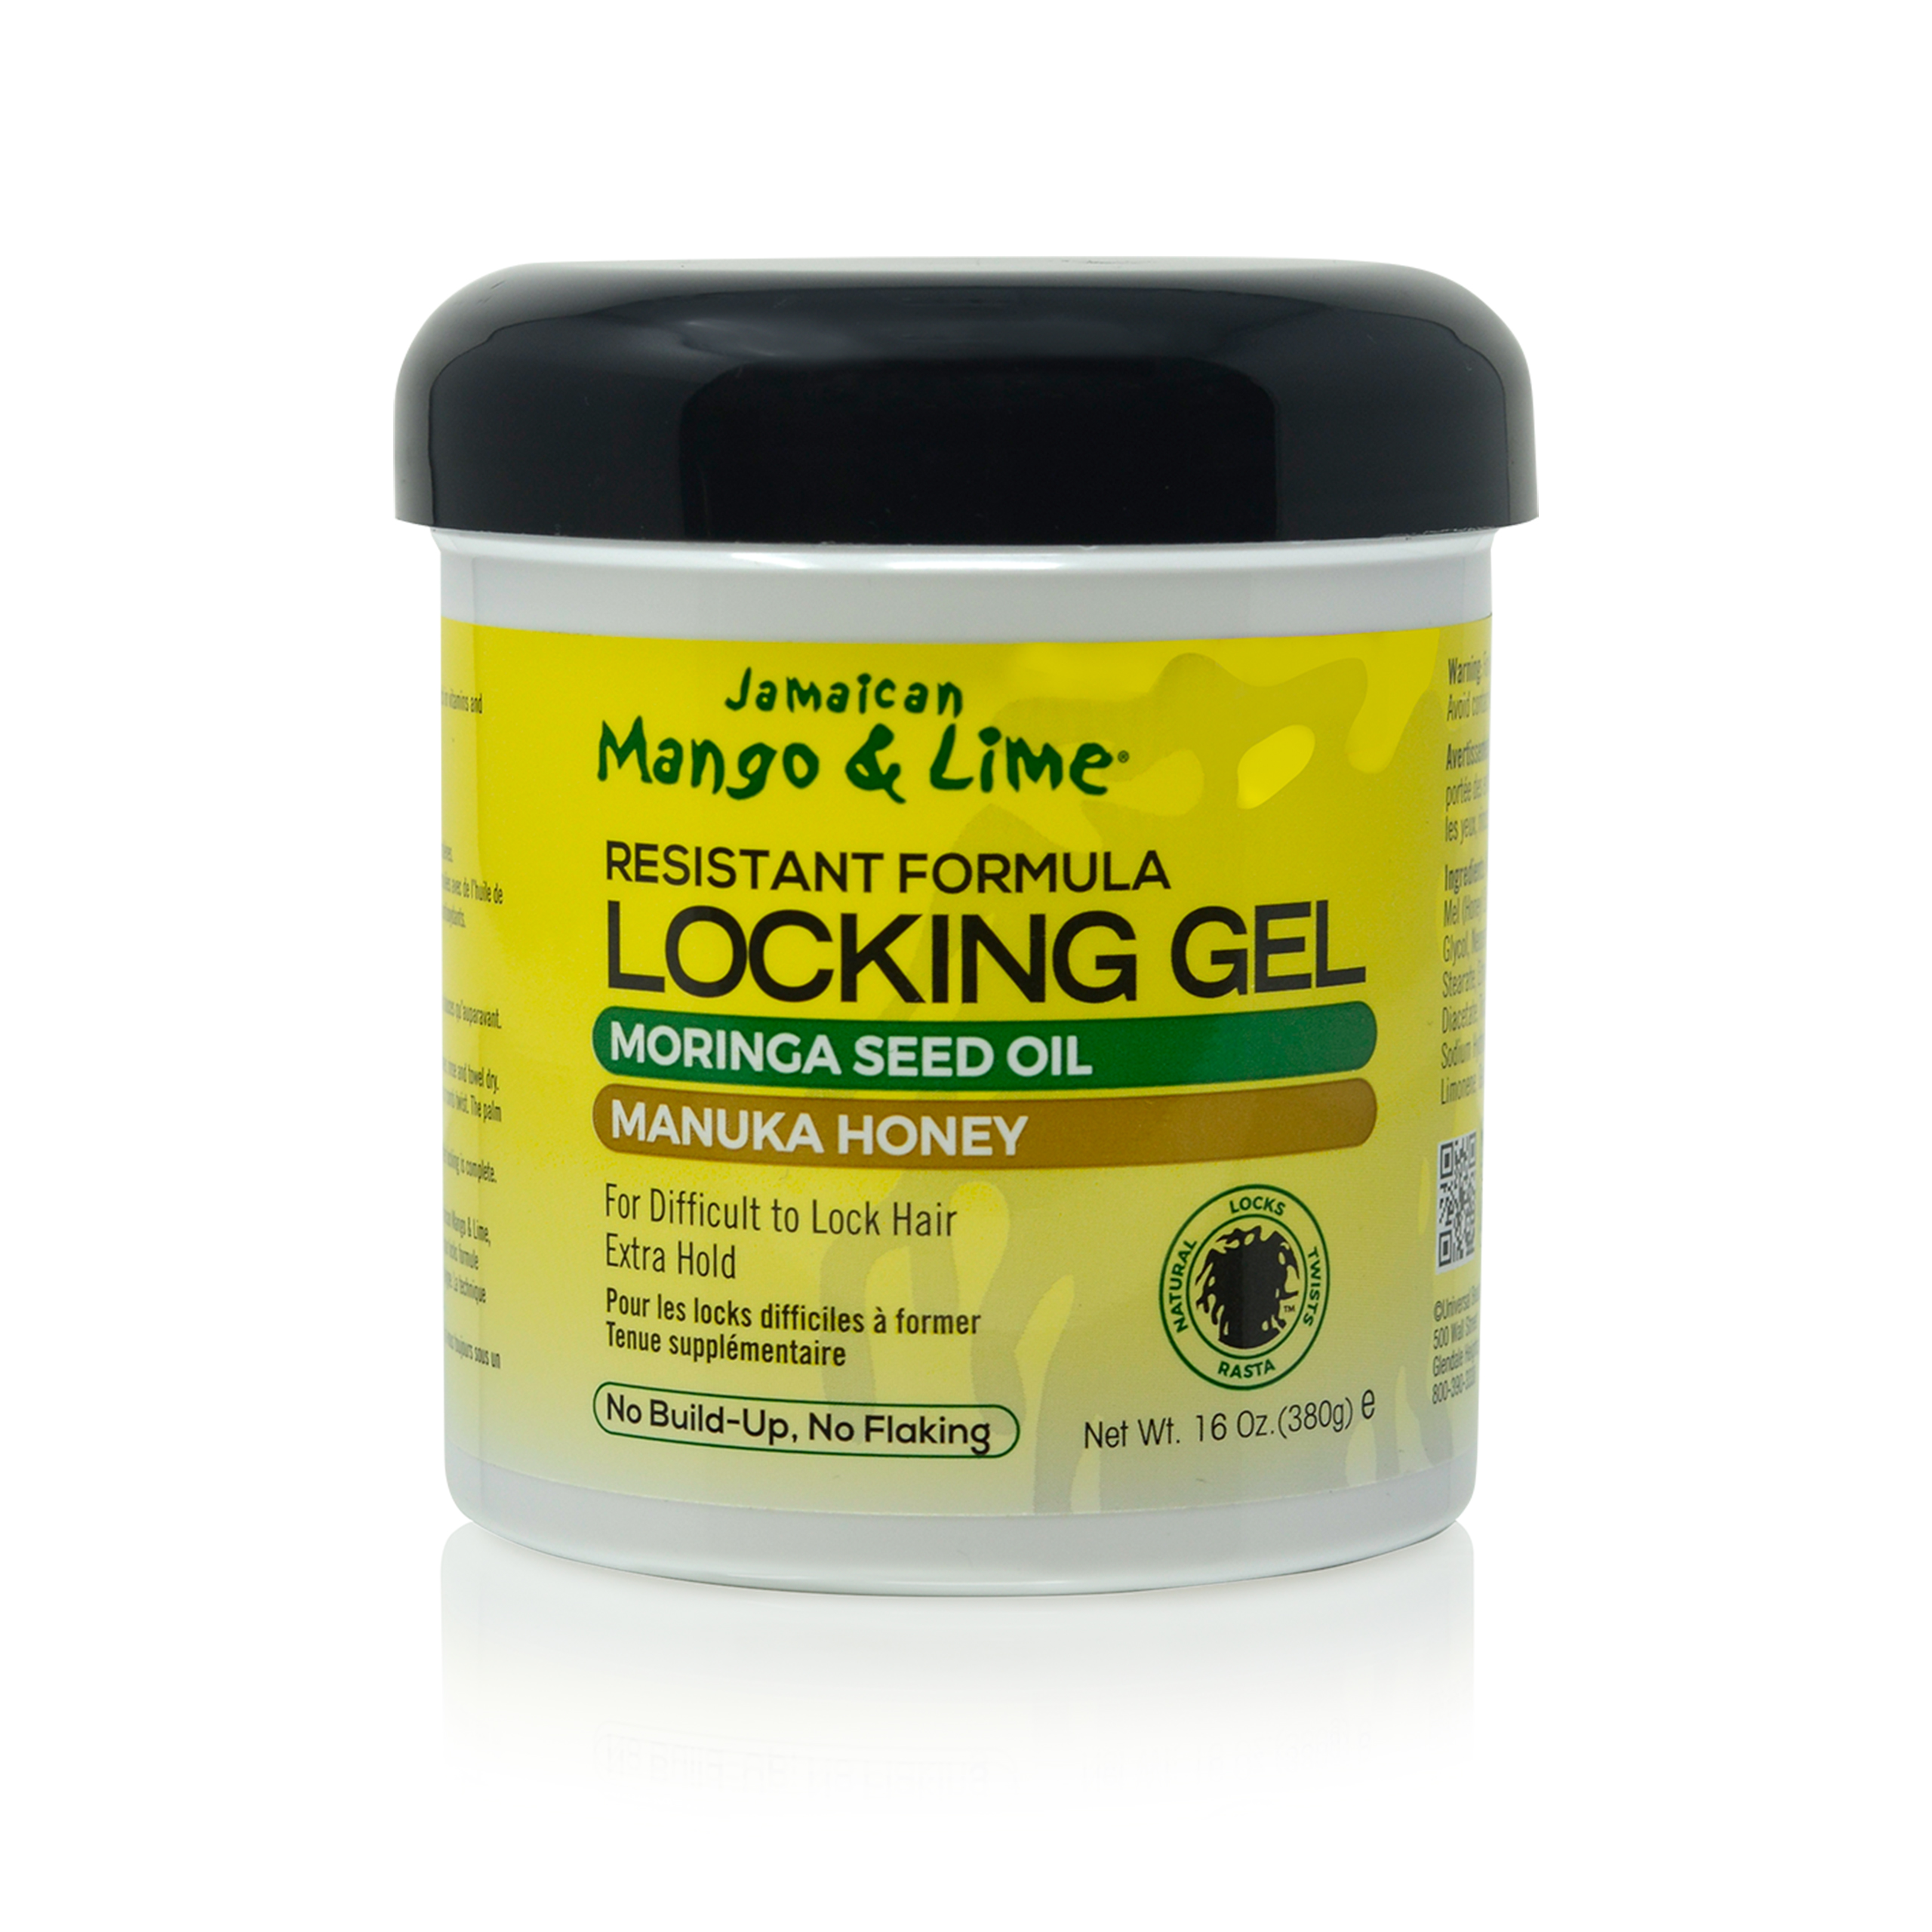 Resistant Formula Locking Gel 16oz | Jamaican Mango and Lime